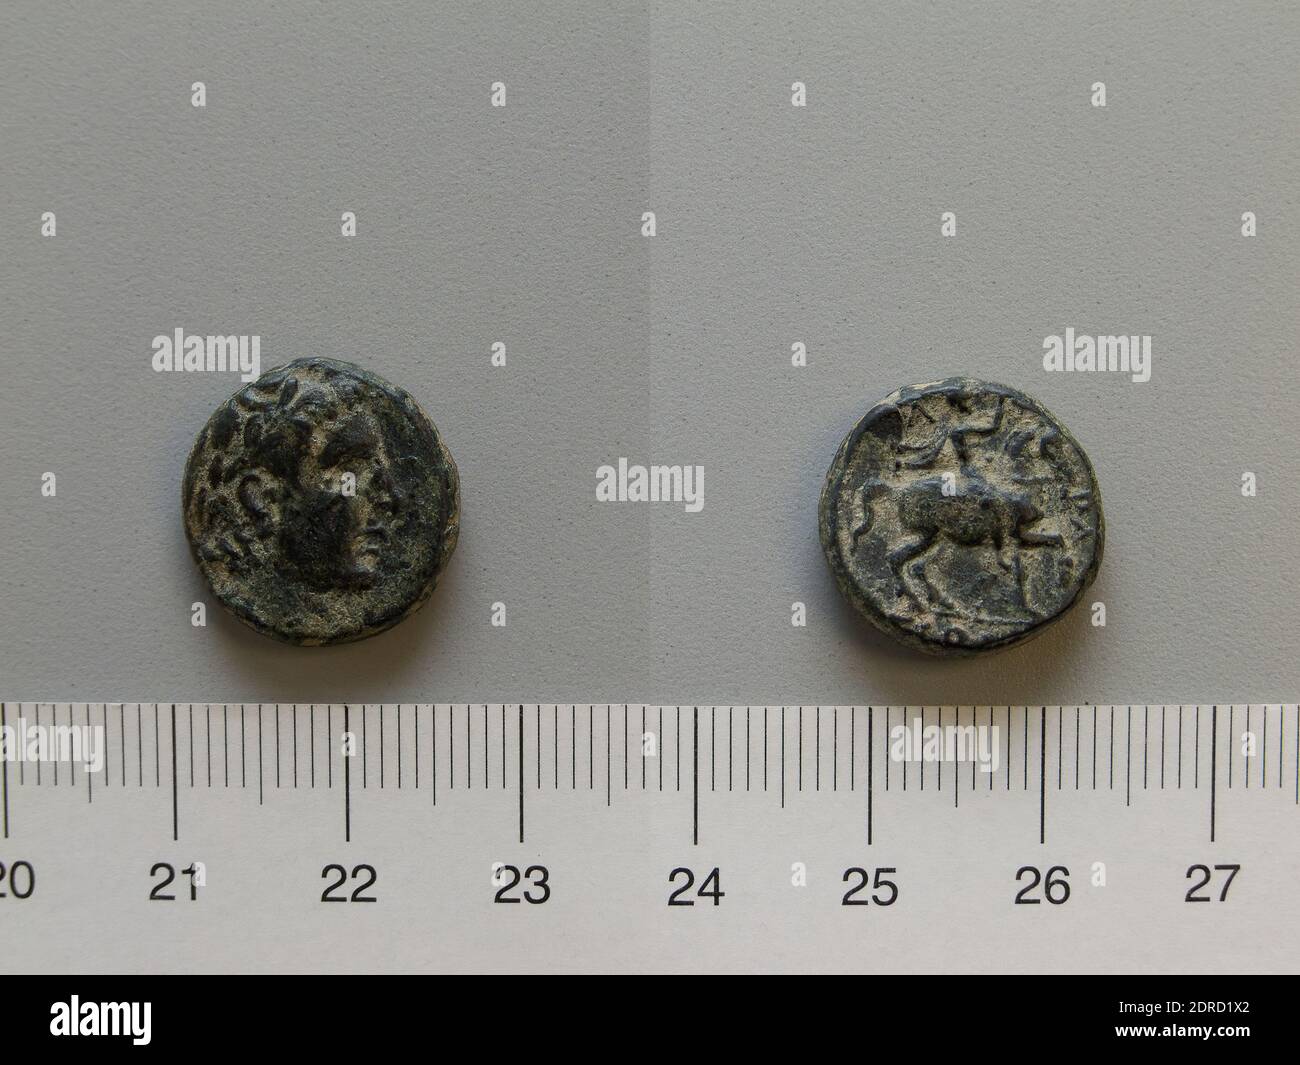 Menta: ATRAX, moneta da Atrax, IV secolo a.C., Bronzo, 6.02 g, 9:00, 17.5 mm, Made in Atrax, Tessaglia, Greco, IV secolo a.C., Numismatica Foto Stock